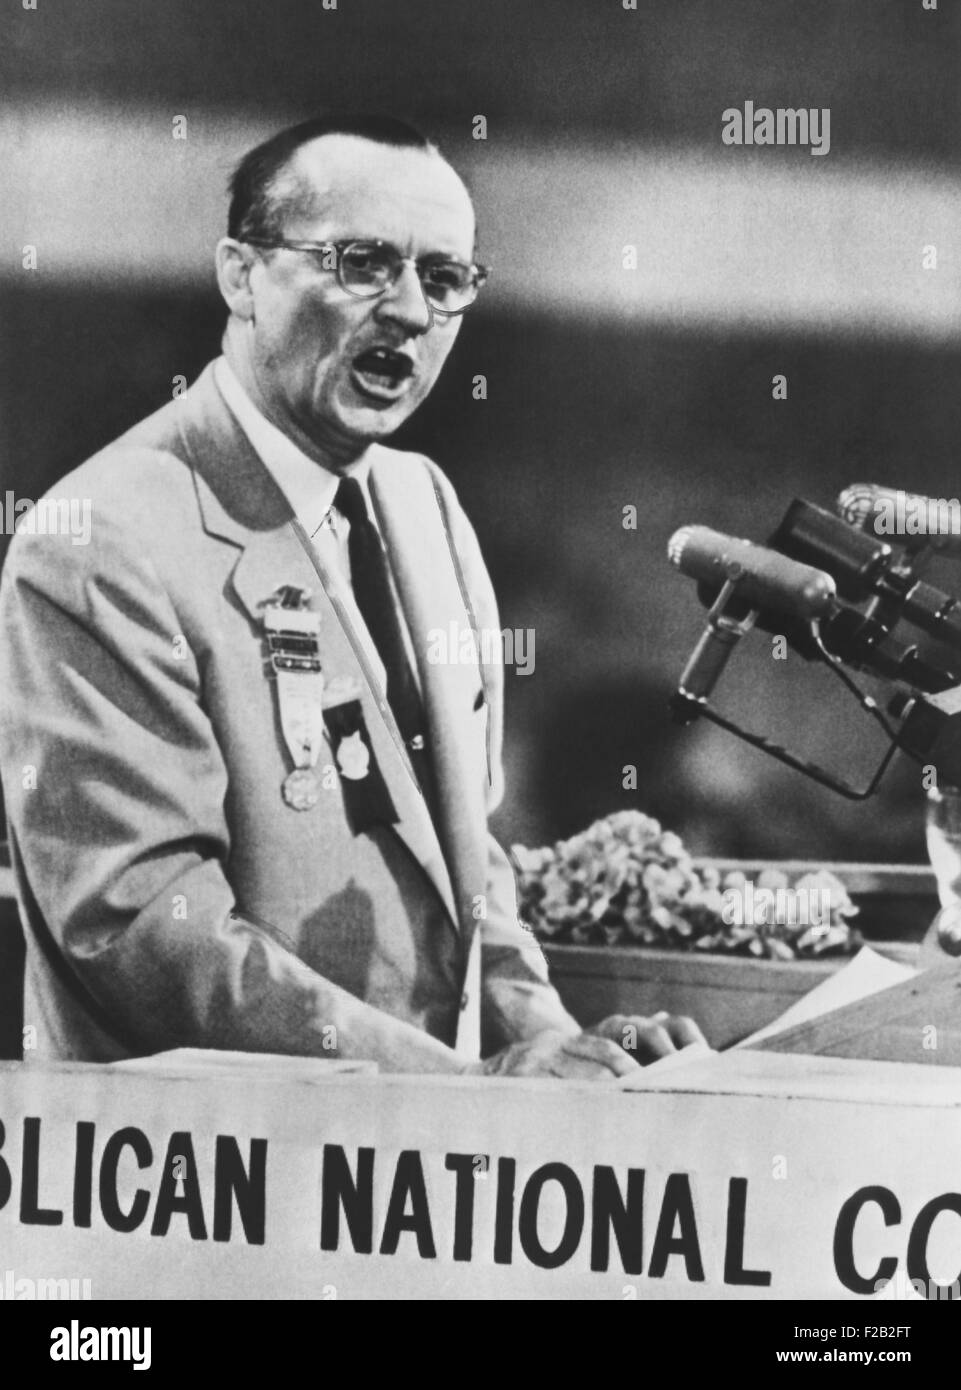 Sen. William Knowland nominates Gov. Earle Warren for President at GOP Convention. Chicago, 1952. The nomination went to Gen. Dwight Eisenhower. (CSU 2015 7 357) Stock Photo